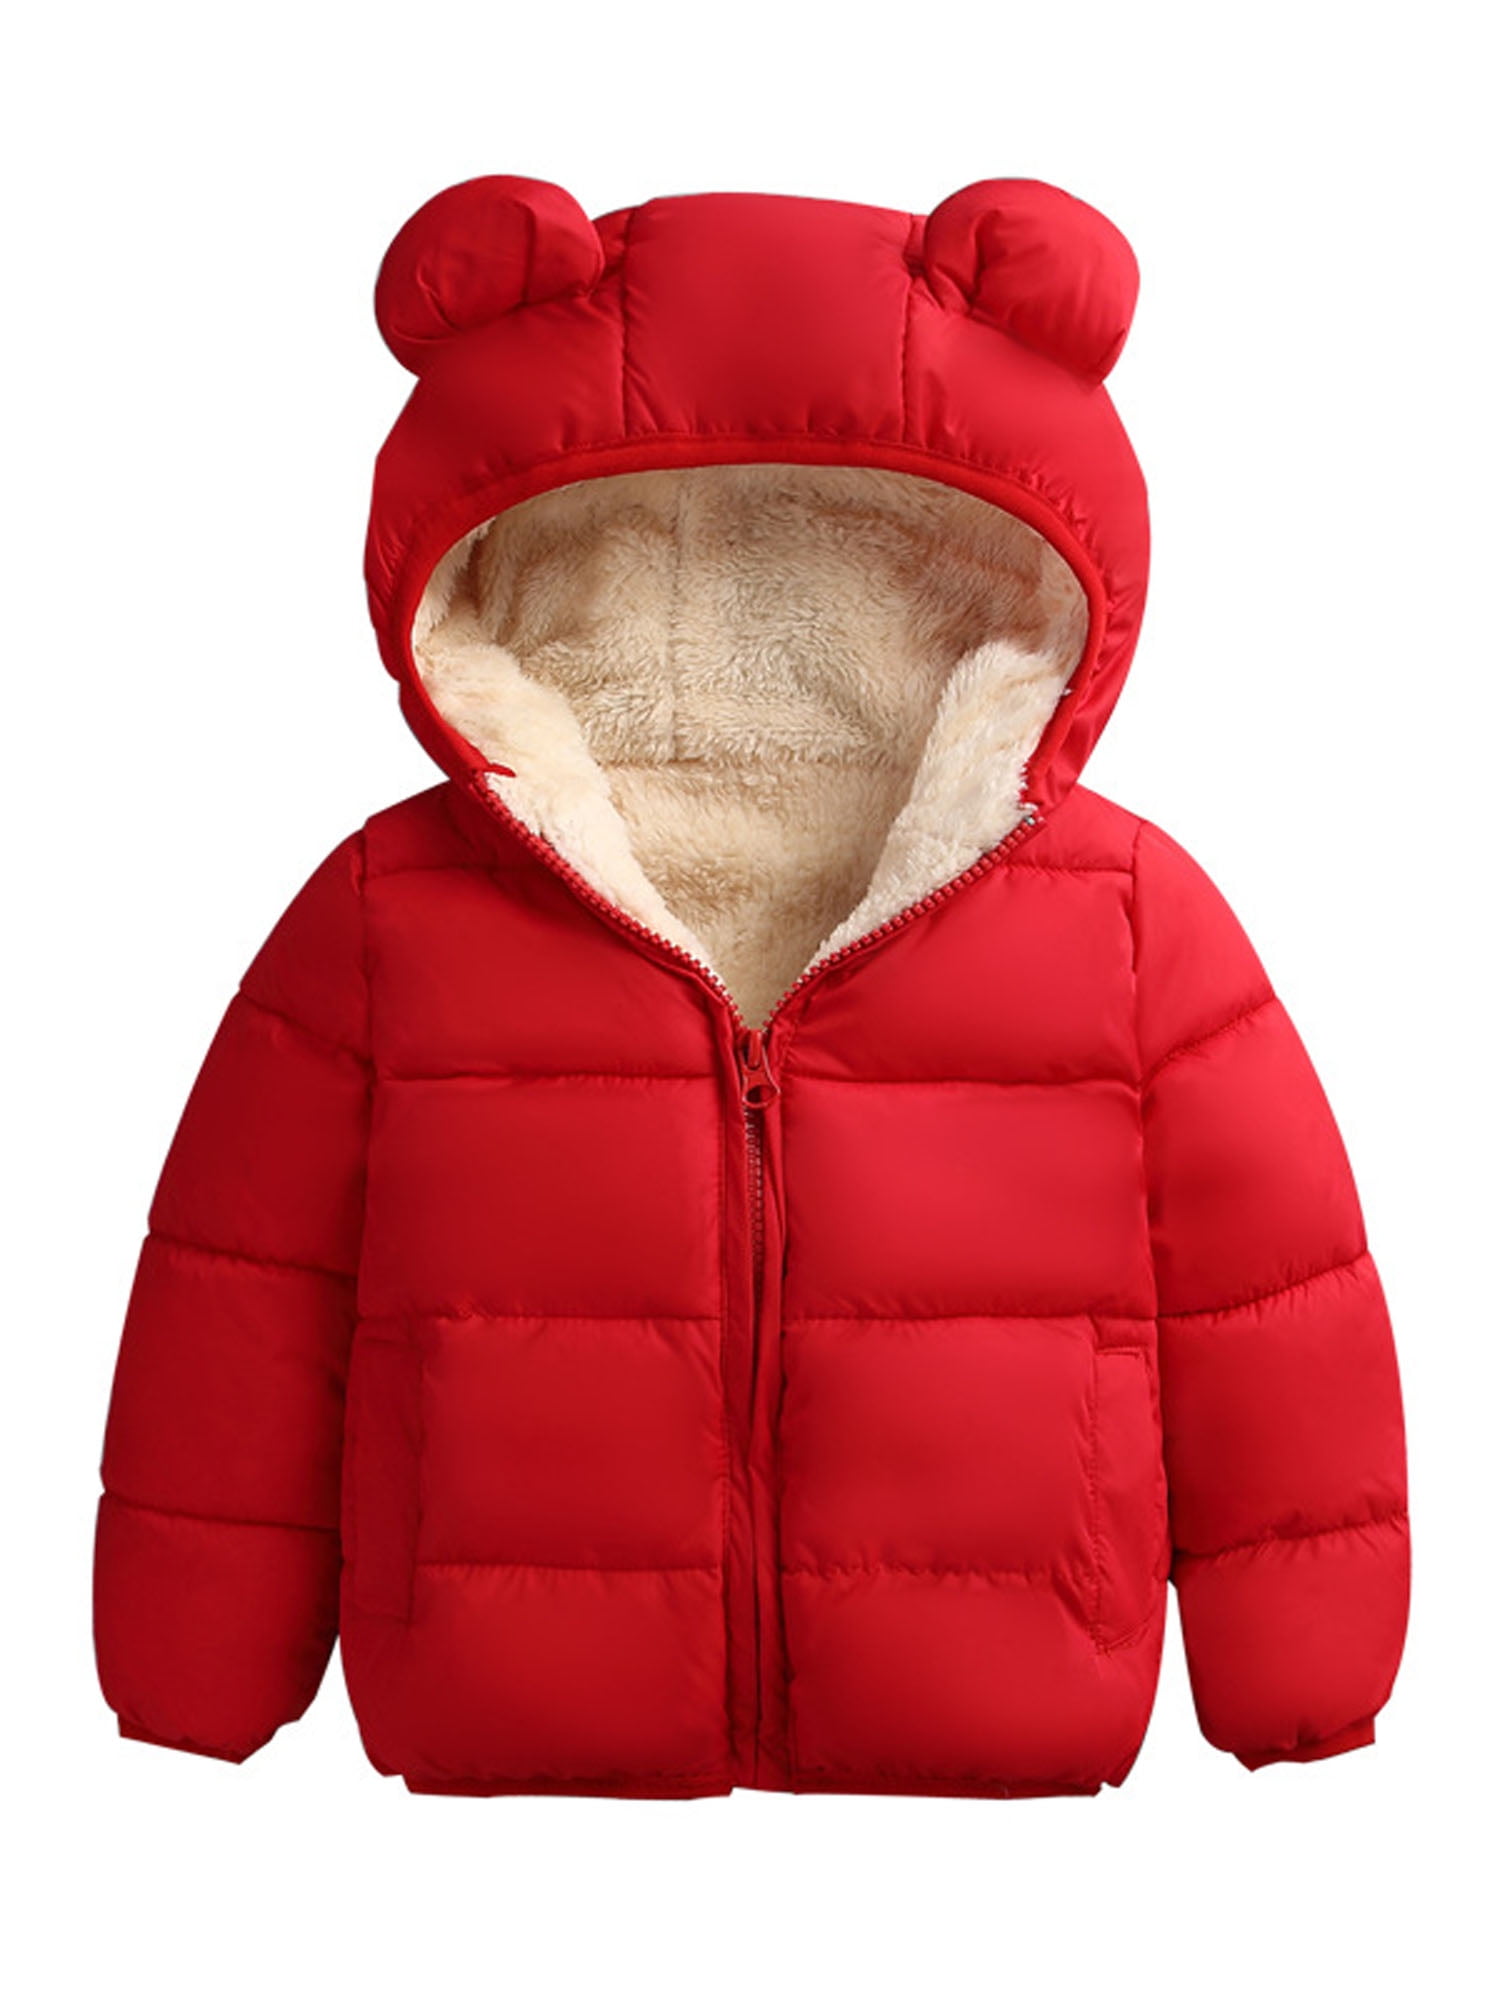 Toddler Baby Jacket Animal Boy Girl Cartoon Cow Long Sleeve Ears Hoodie Winter Warm Clothes Coat Fur Hood